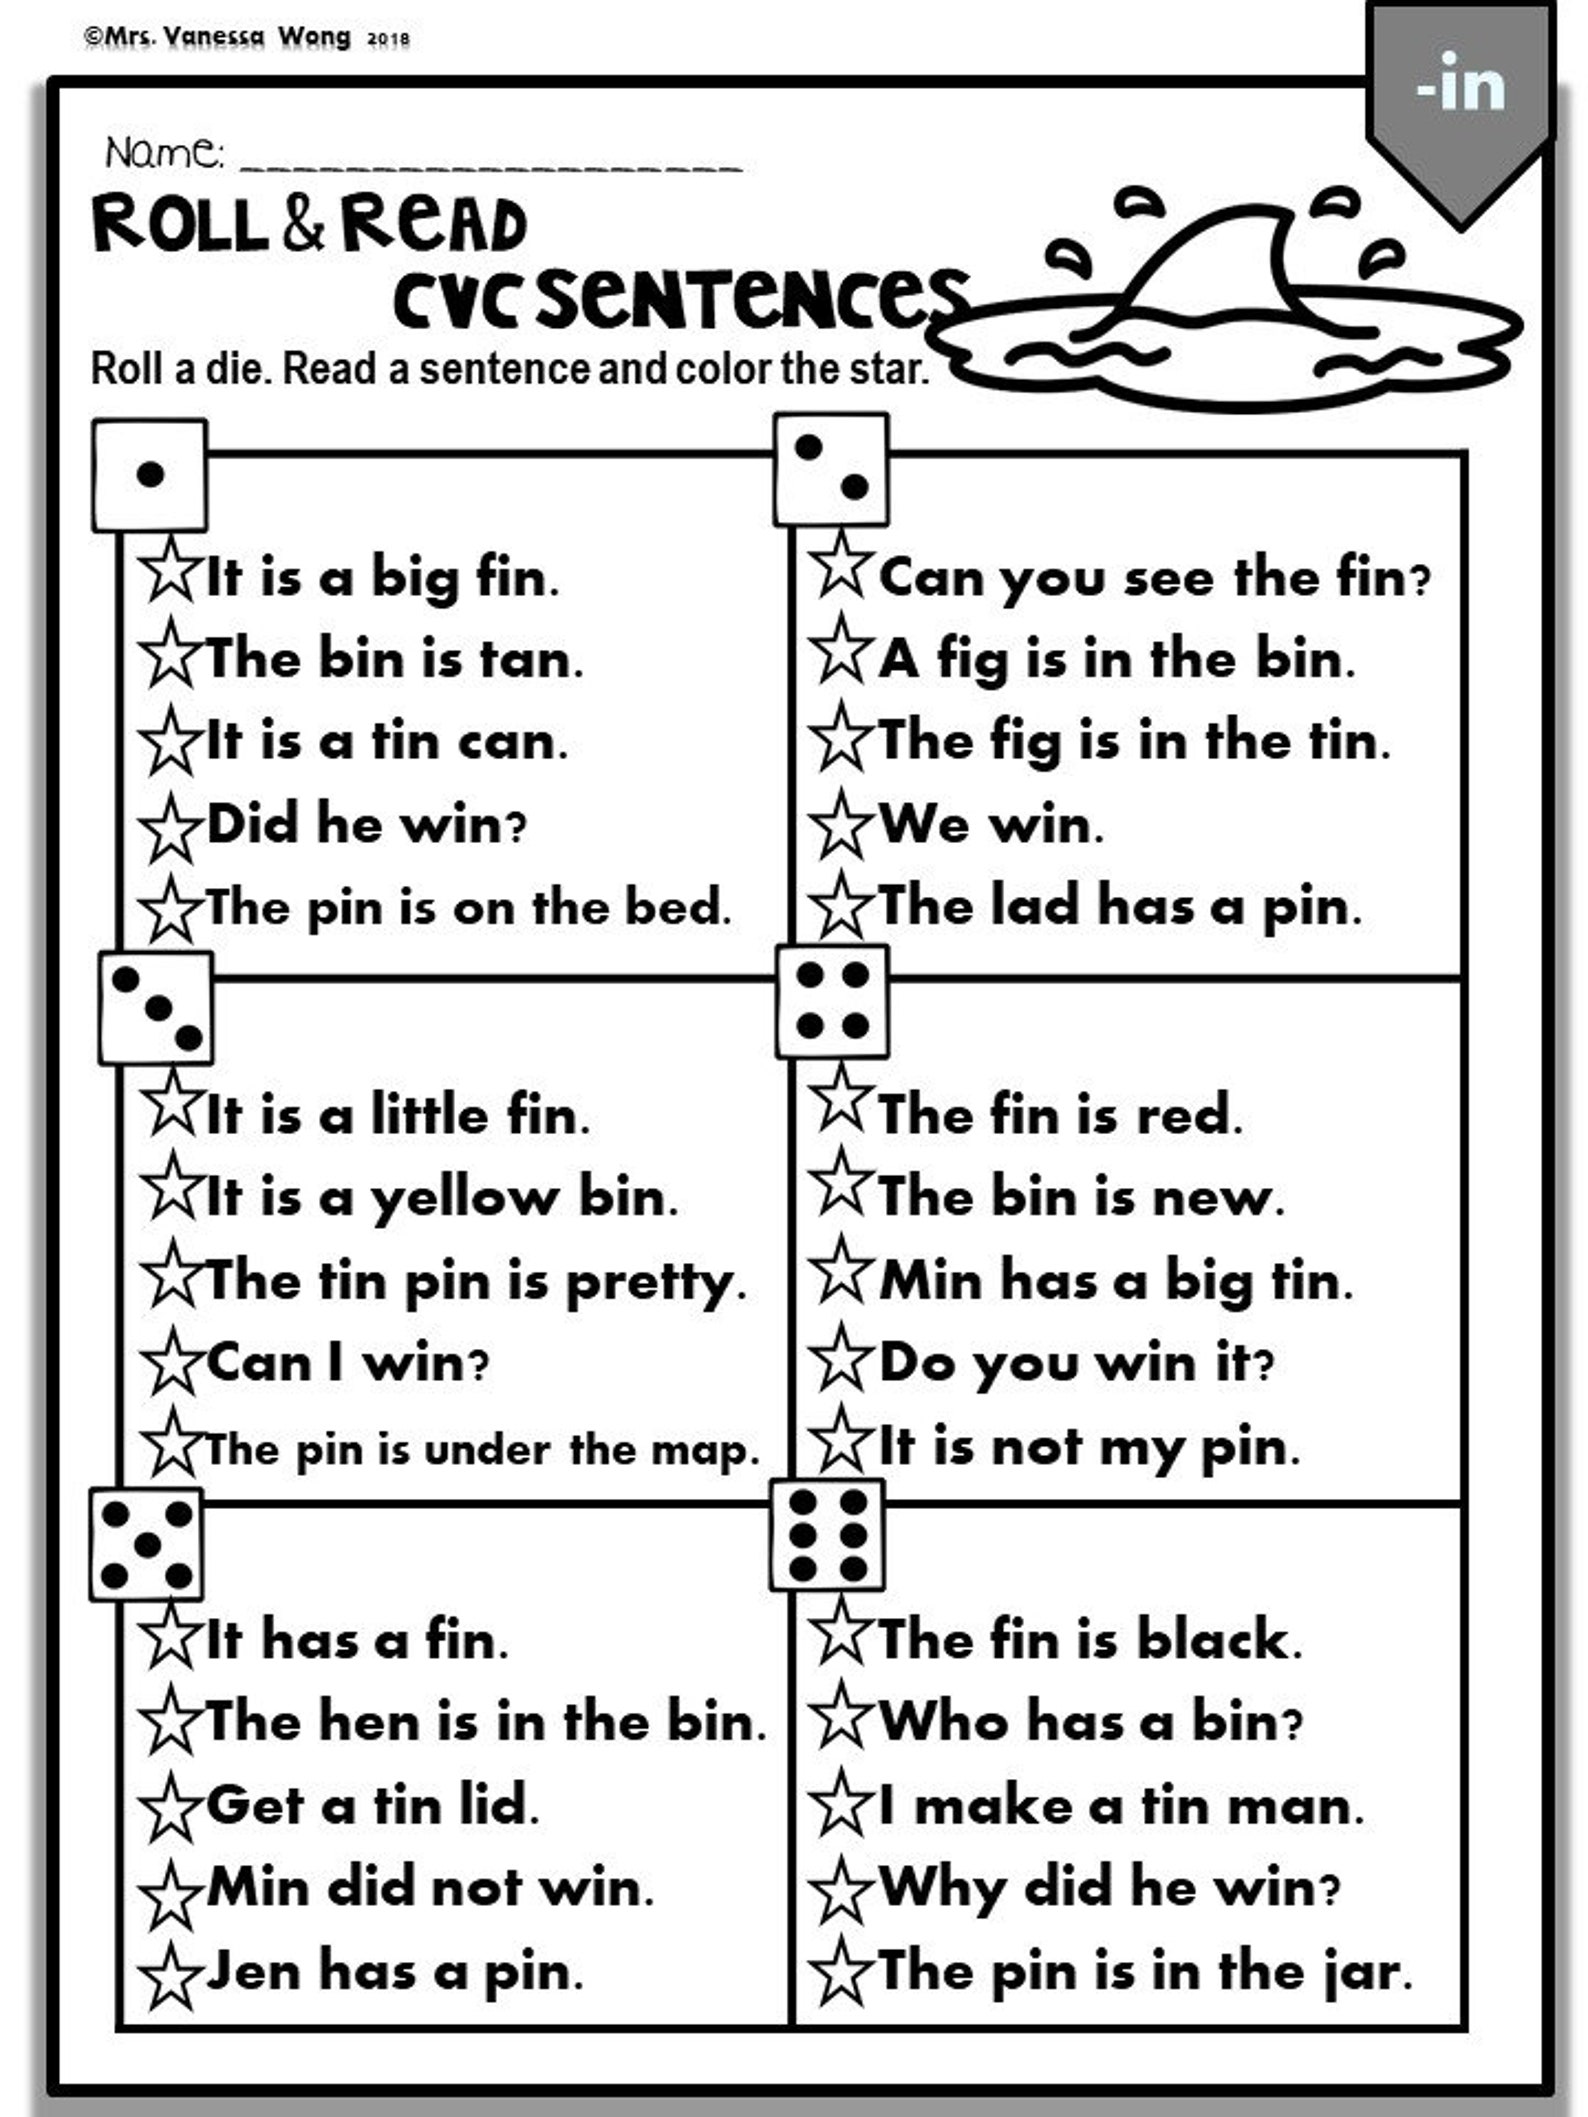 phonics-worksheets-cvc-short-vowels-roll-read-sentences-kindergarten